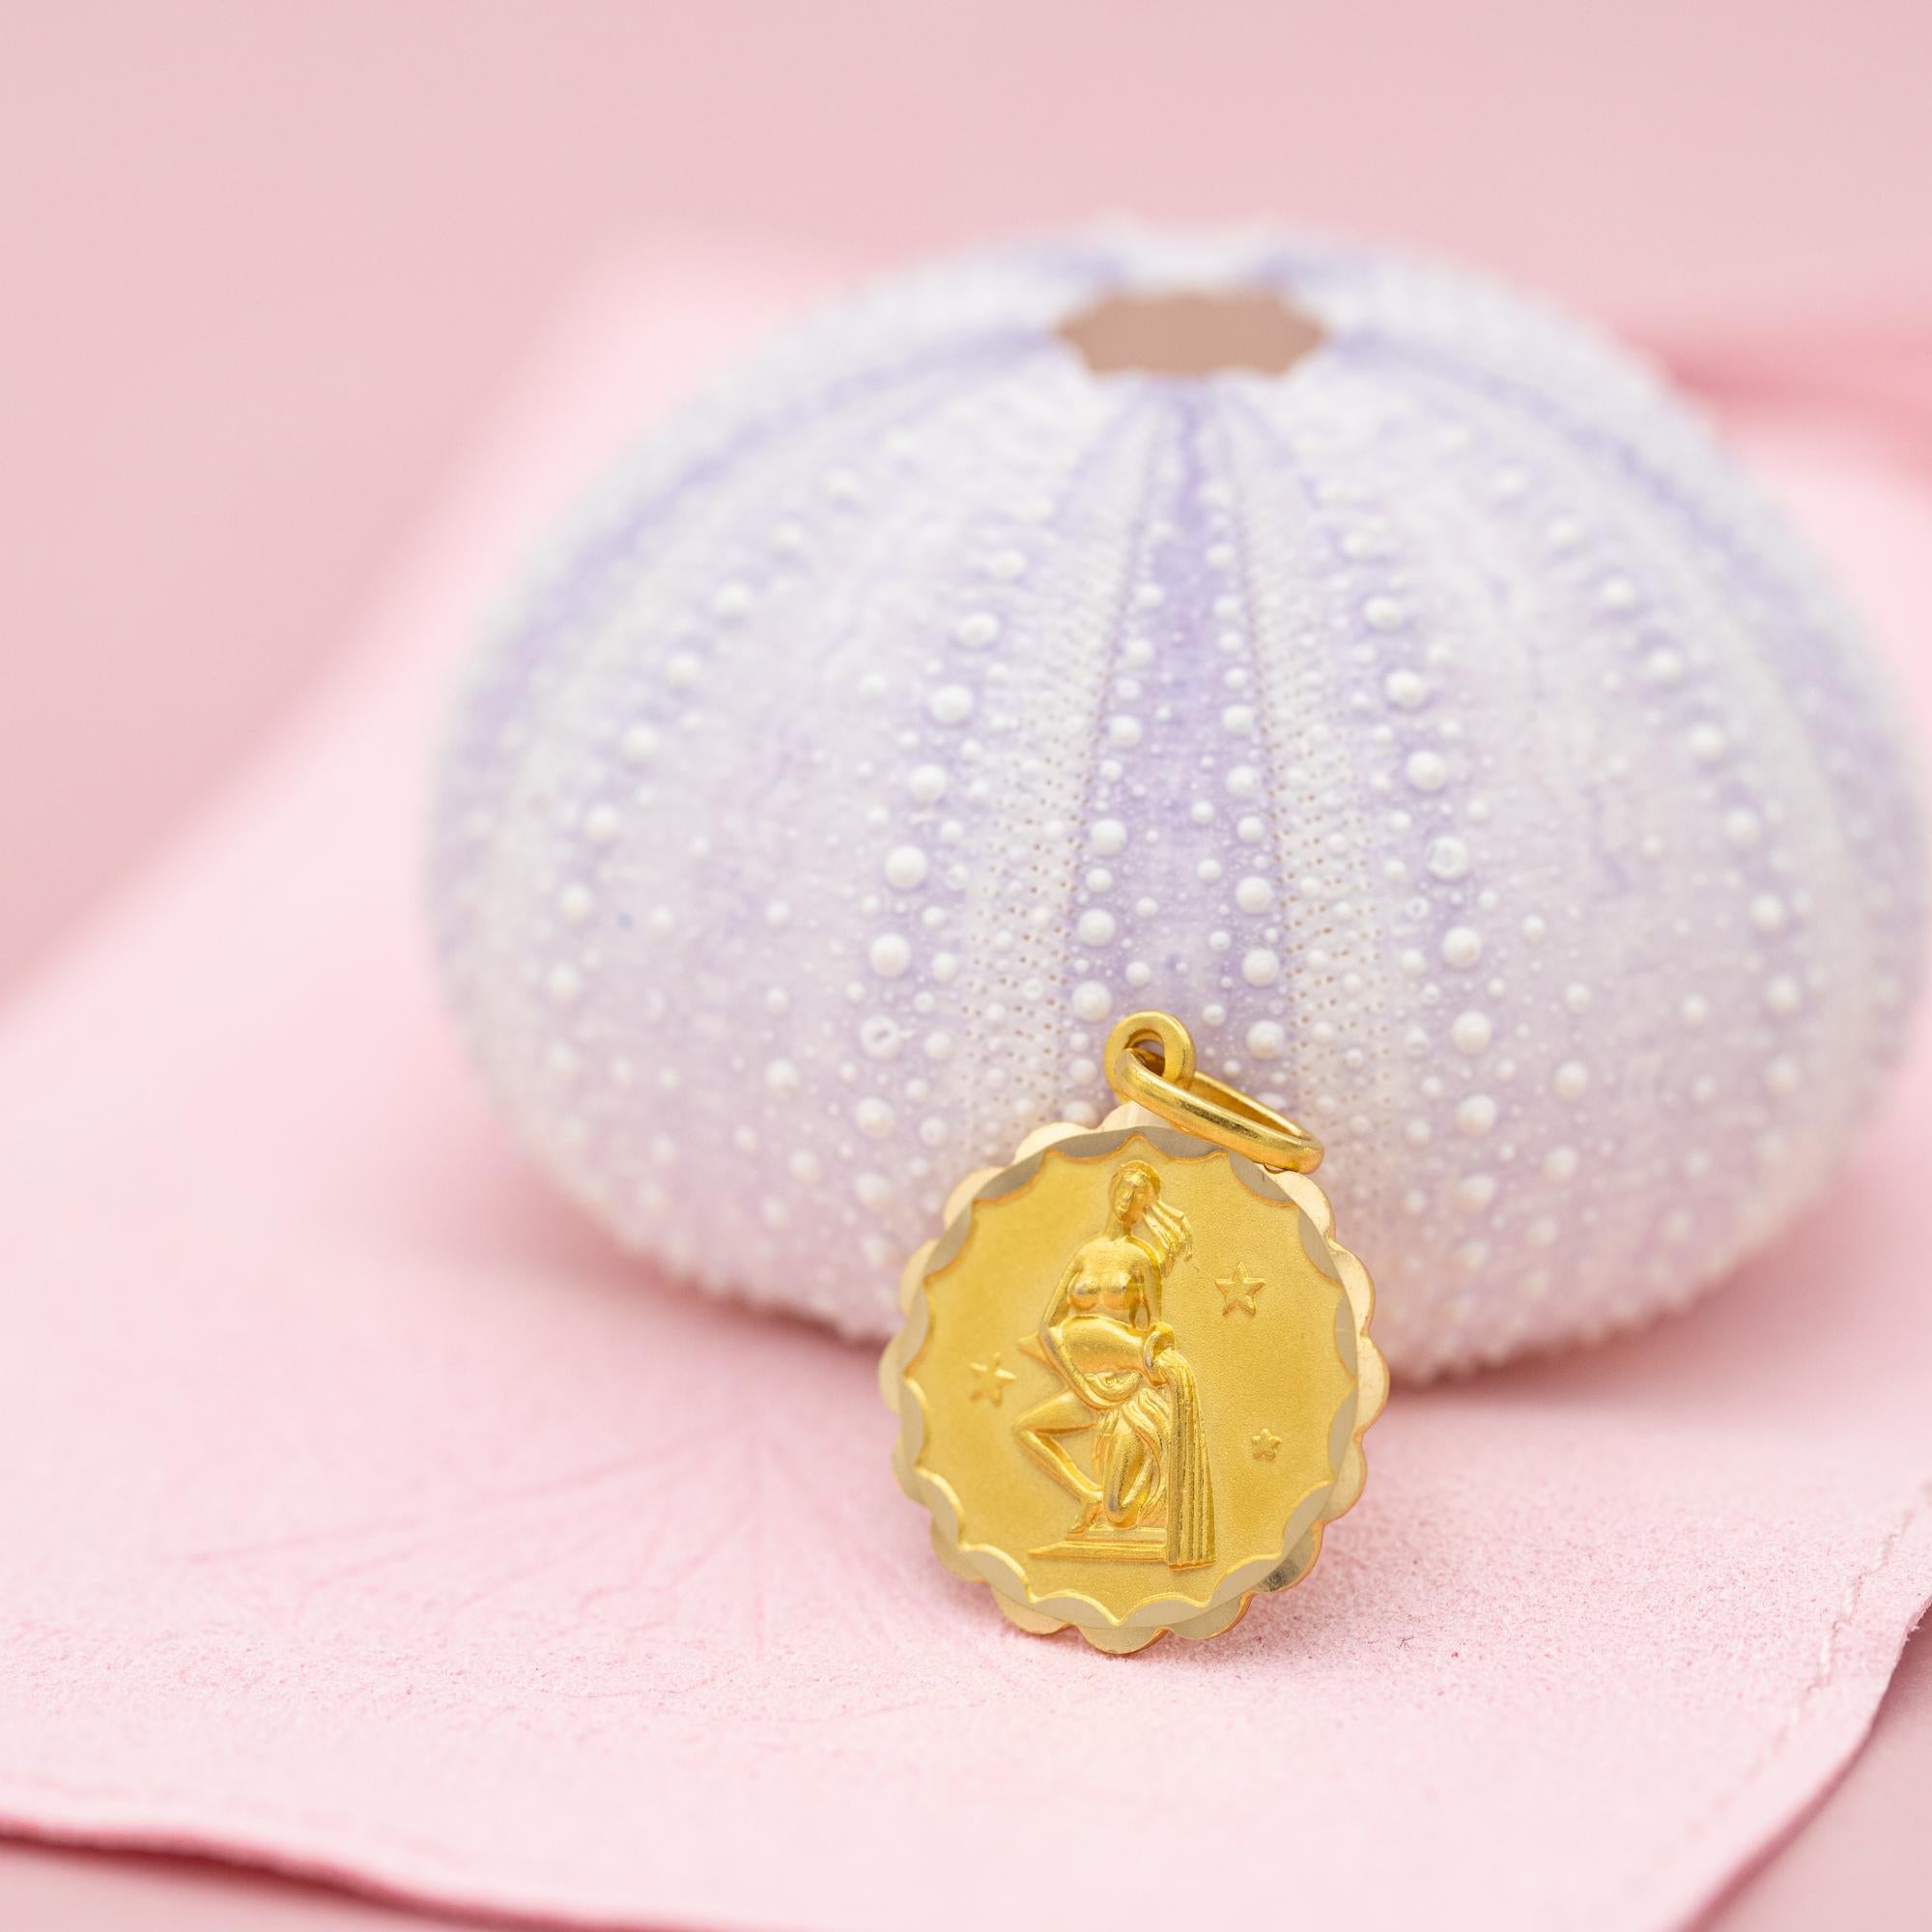 Vintage 18 k Italian zodiac charm pendant - Aquarius charm - solid yellow gold 1